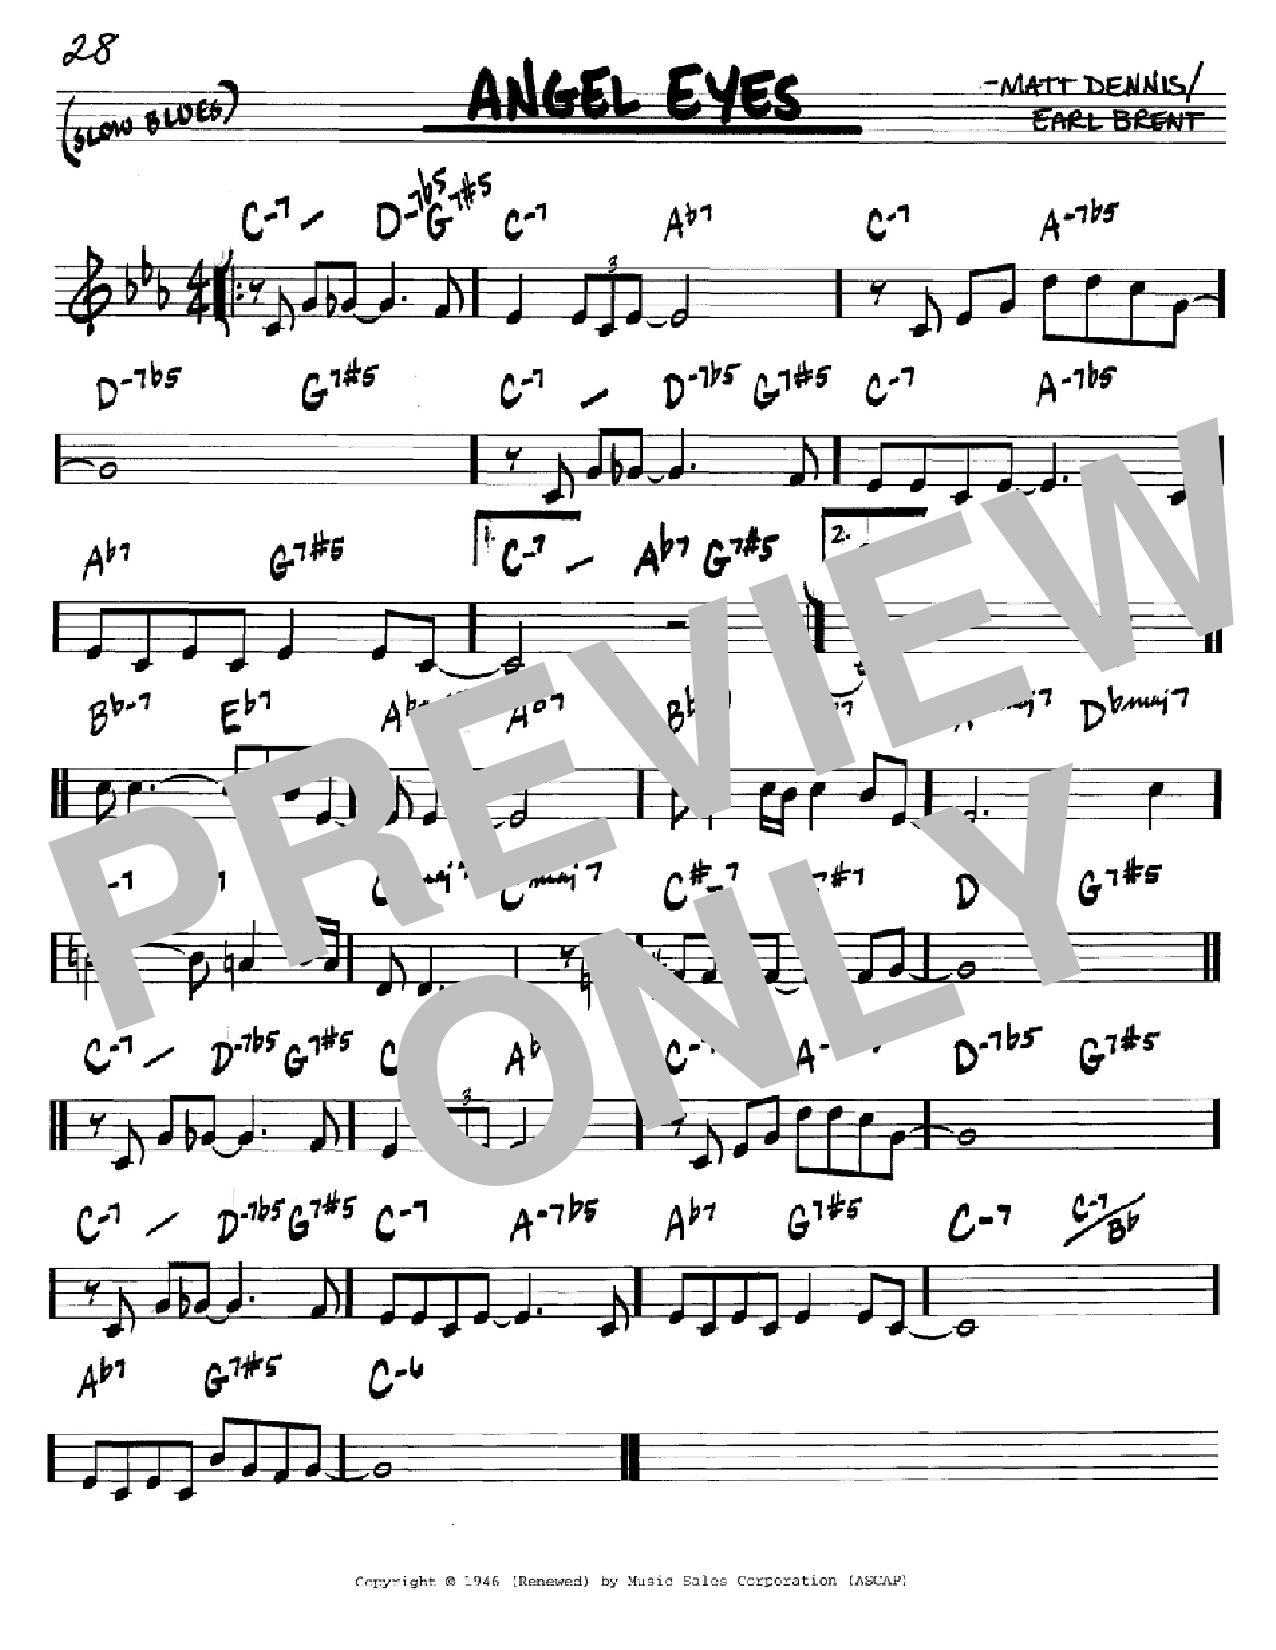 Frank Sinatra Angel Eyes Sheet Music Notes & Chords for Real Book - Melody, Lyrics & Chords - C Instruments - Download or Print PDF